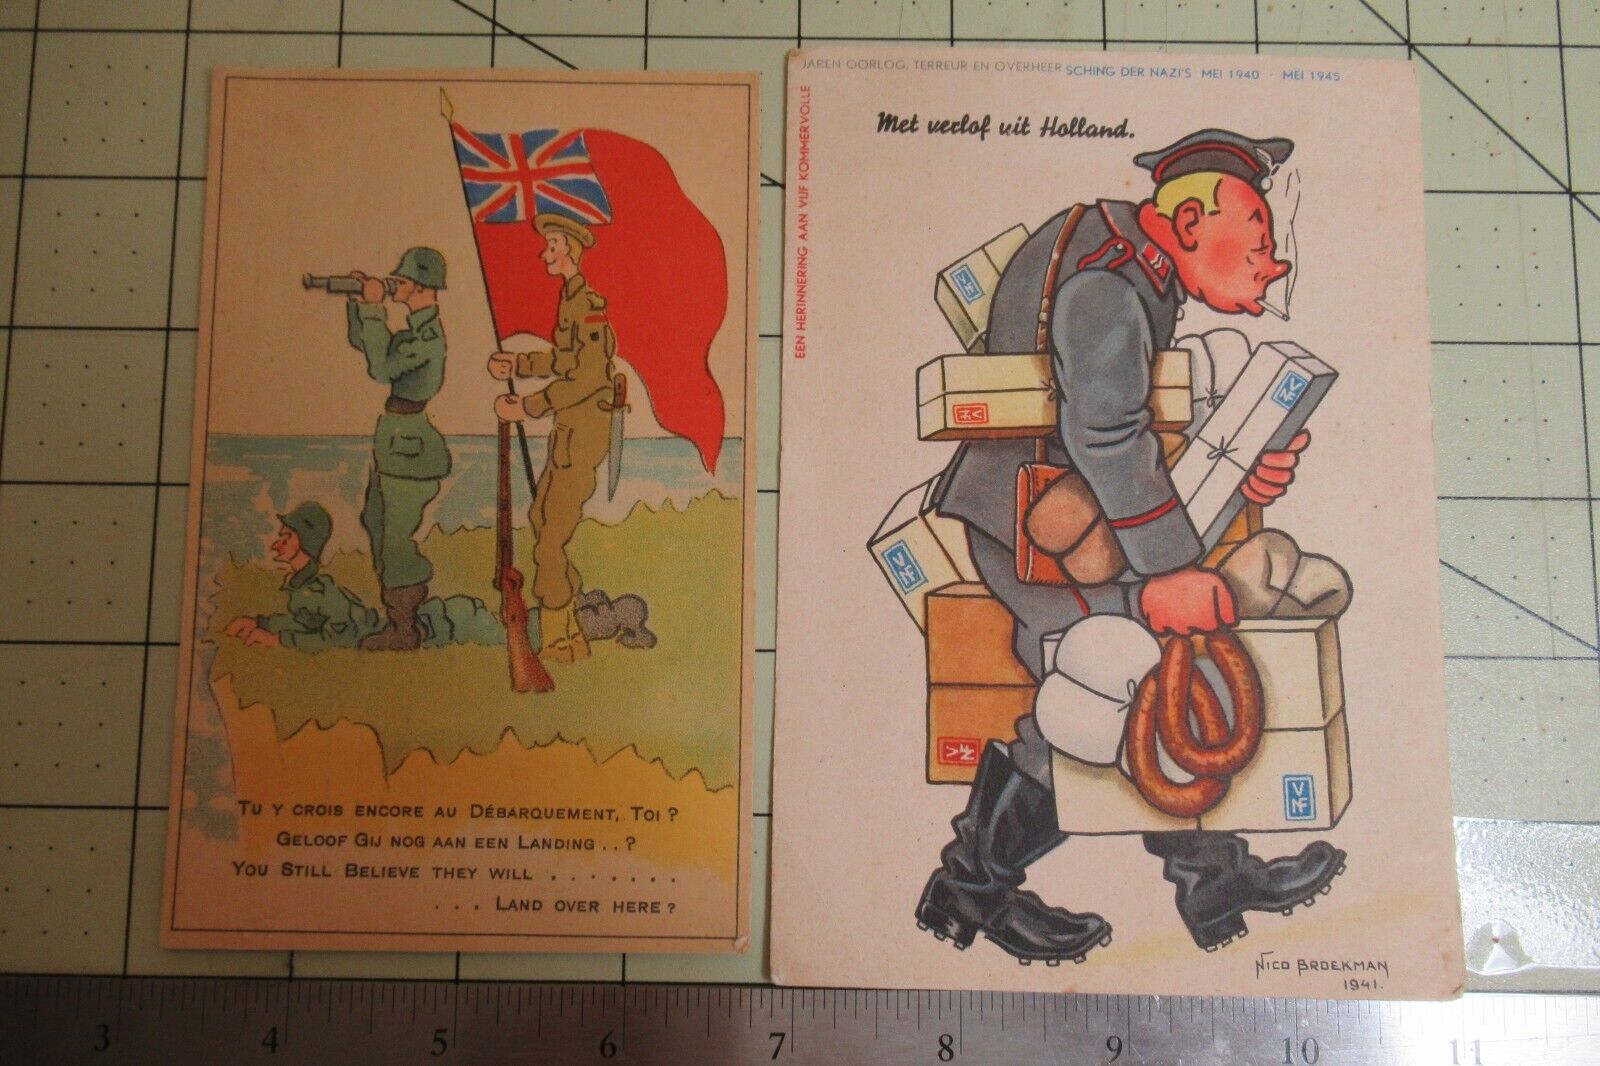 WWII Original Dutch postcards on occupation (POST WAR)